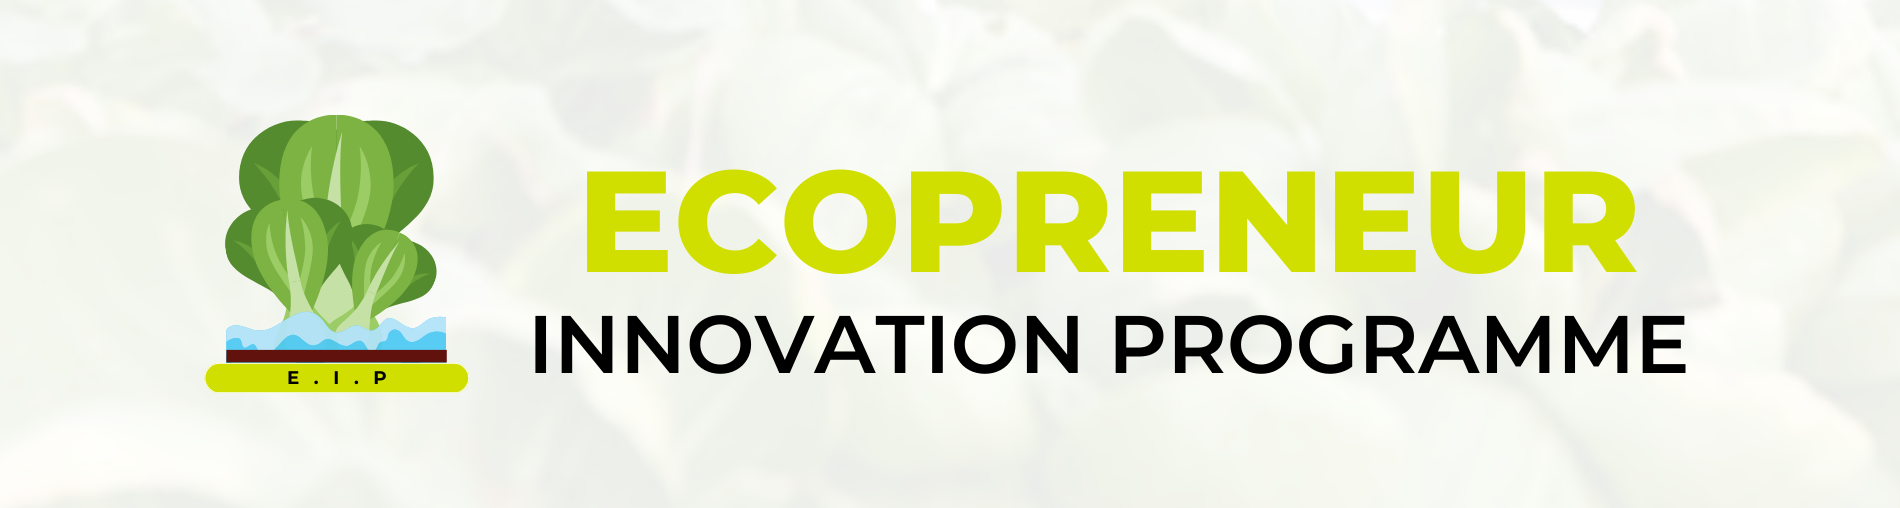 SSC EN - Ecopreneur Innovation Programme Banner